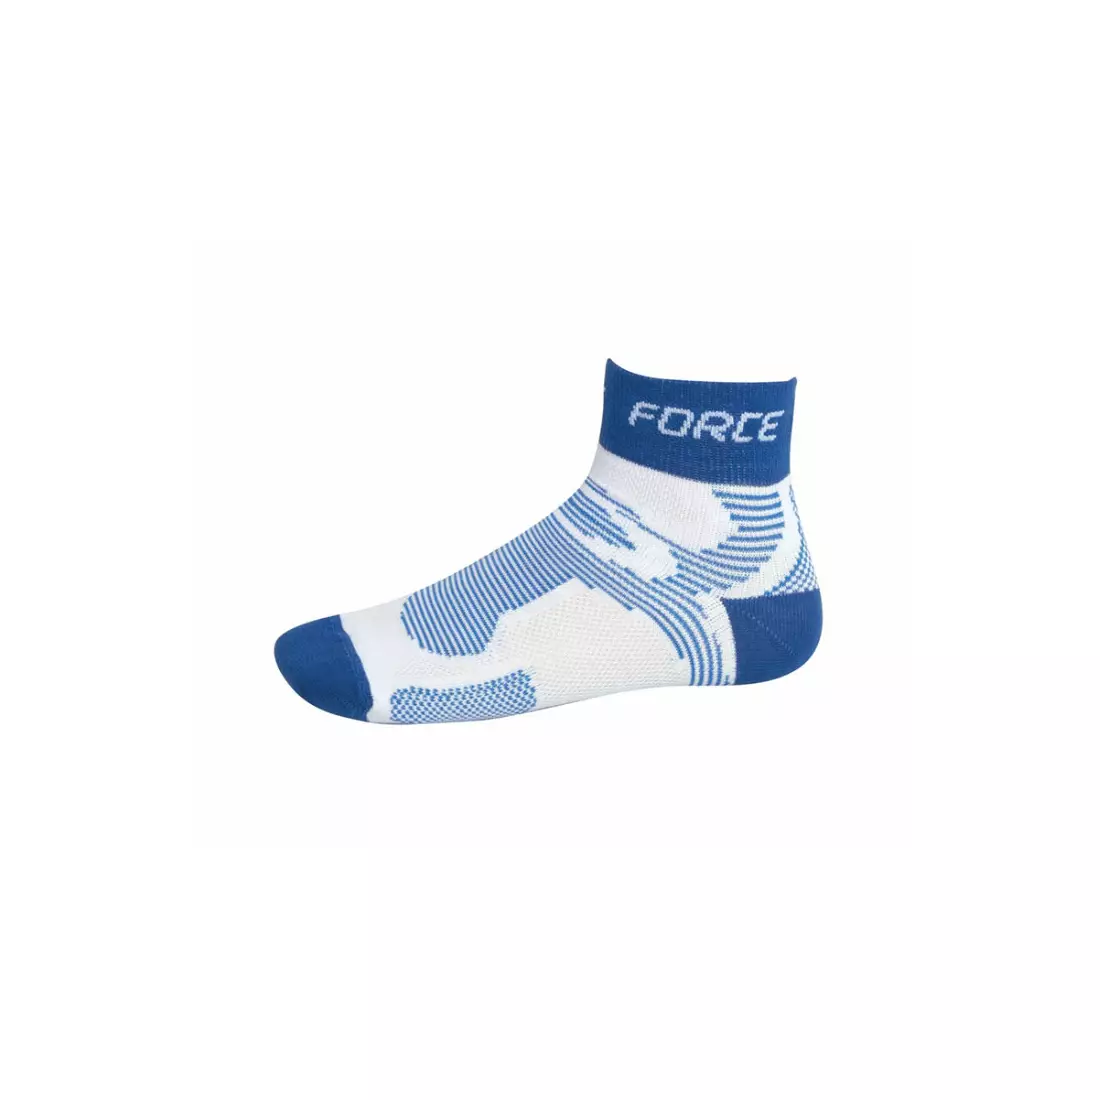 FORCE 2 COOLMAX športové ponožky 901021/901026 - biele a modré